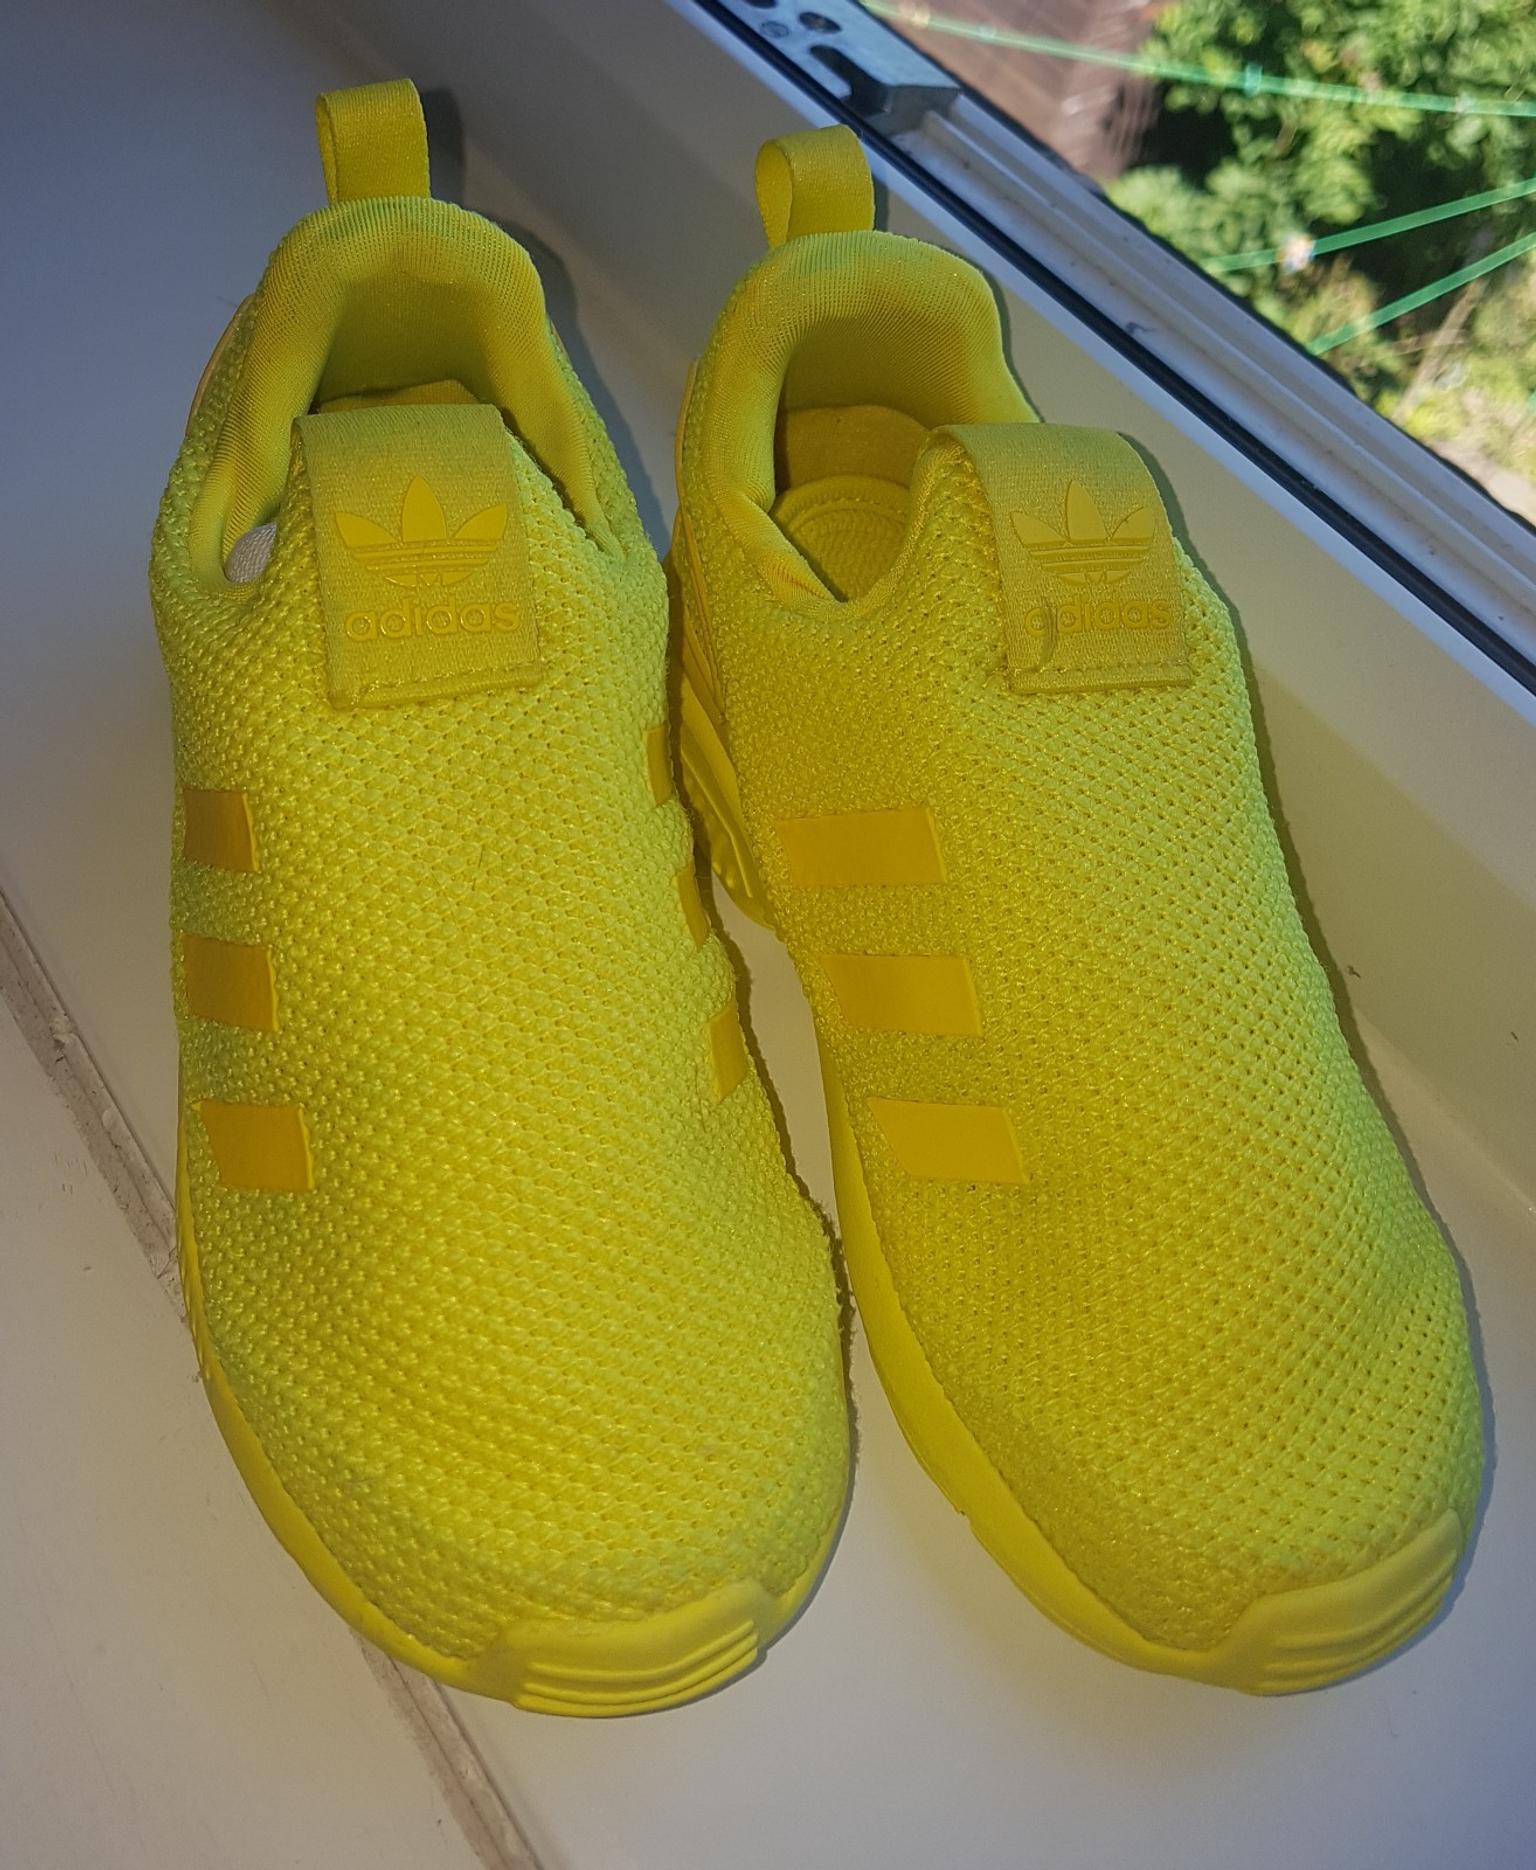 yellow adidas trainers